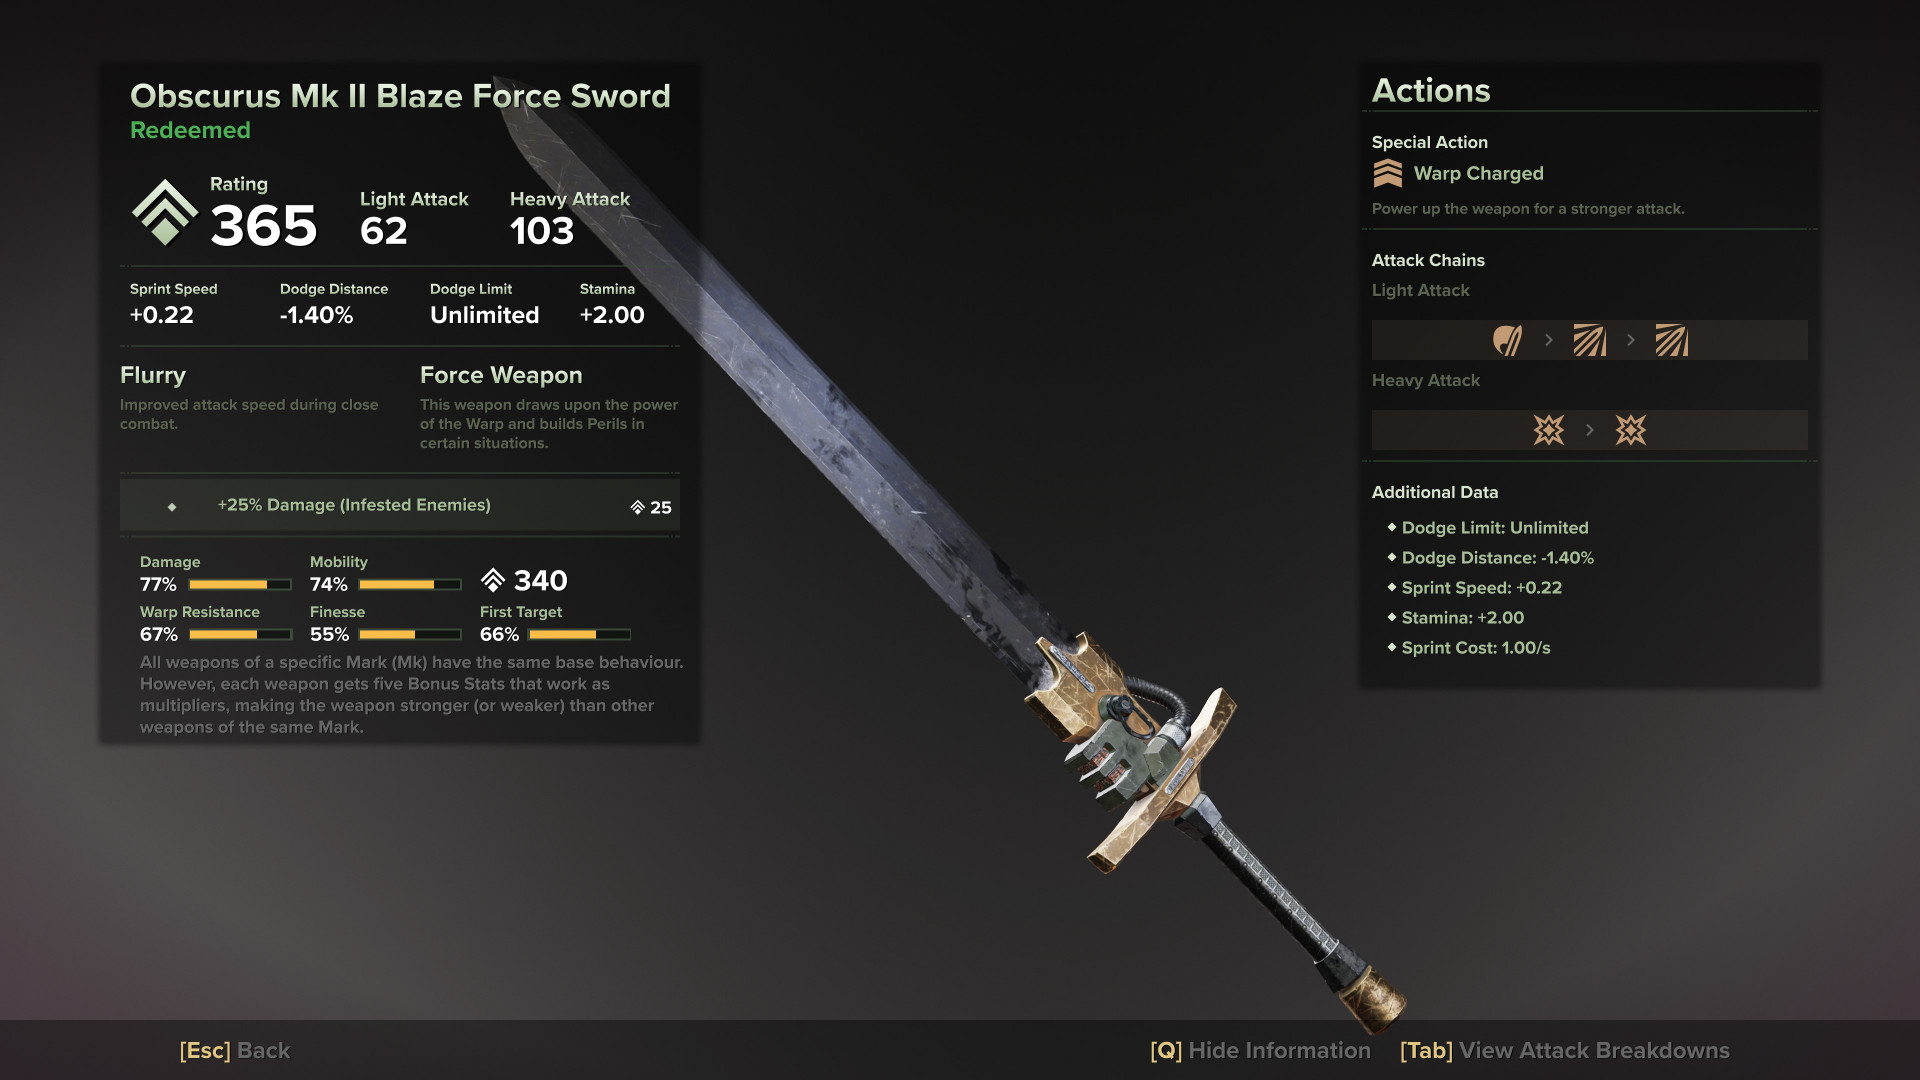 Obscurus Mk II Blaze Force Sword